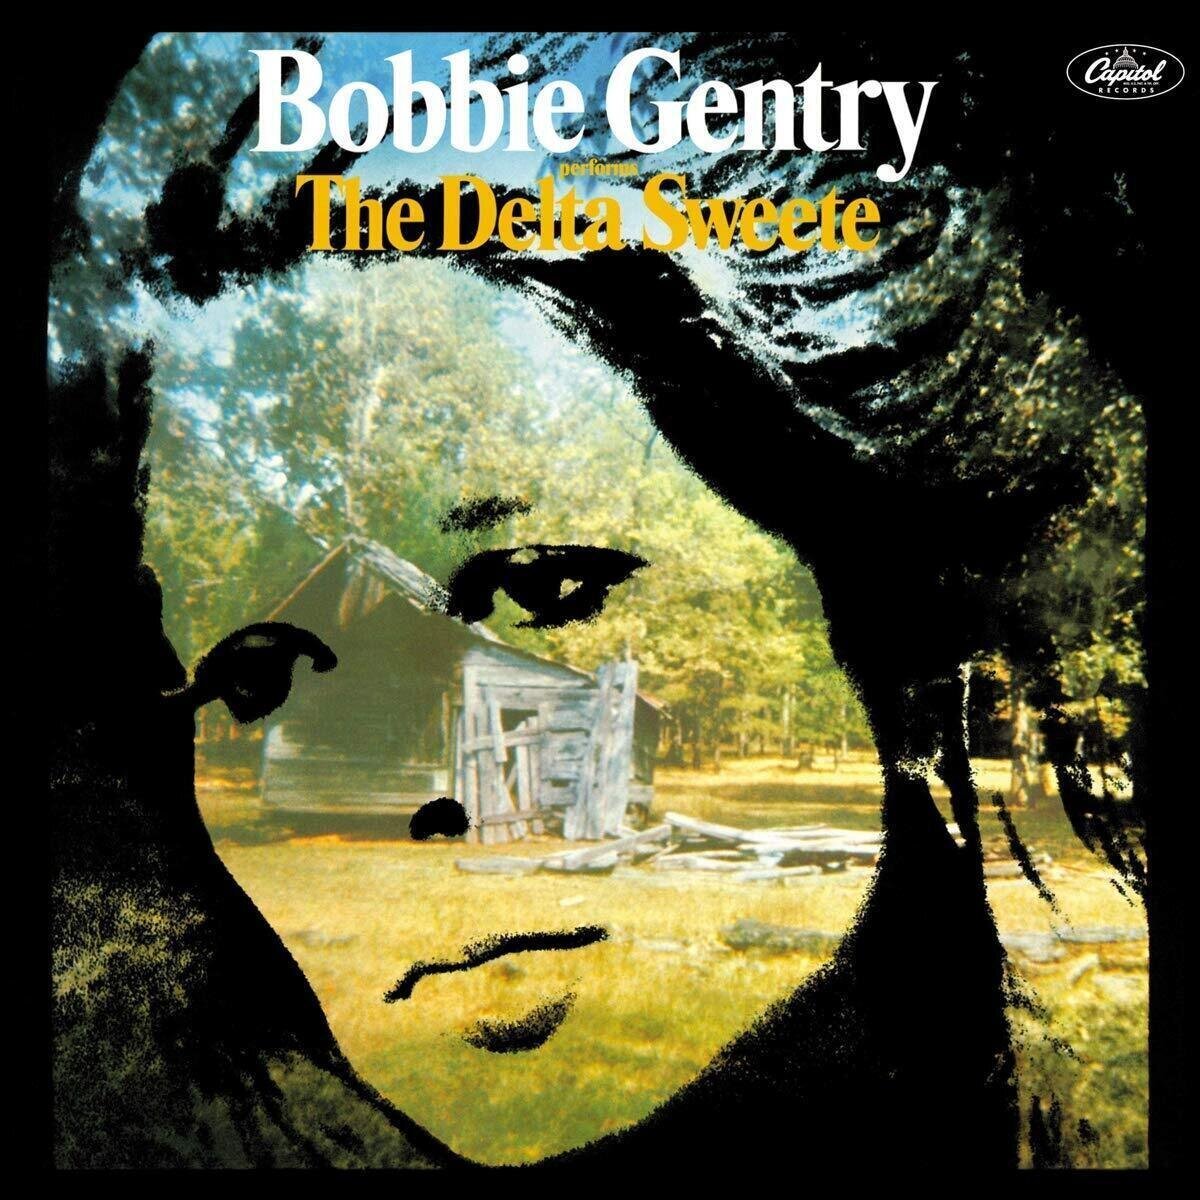 Bobbie Gentry - The Delta Sweete (Deluxe) (2 LP) Bobbie Gentry